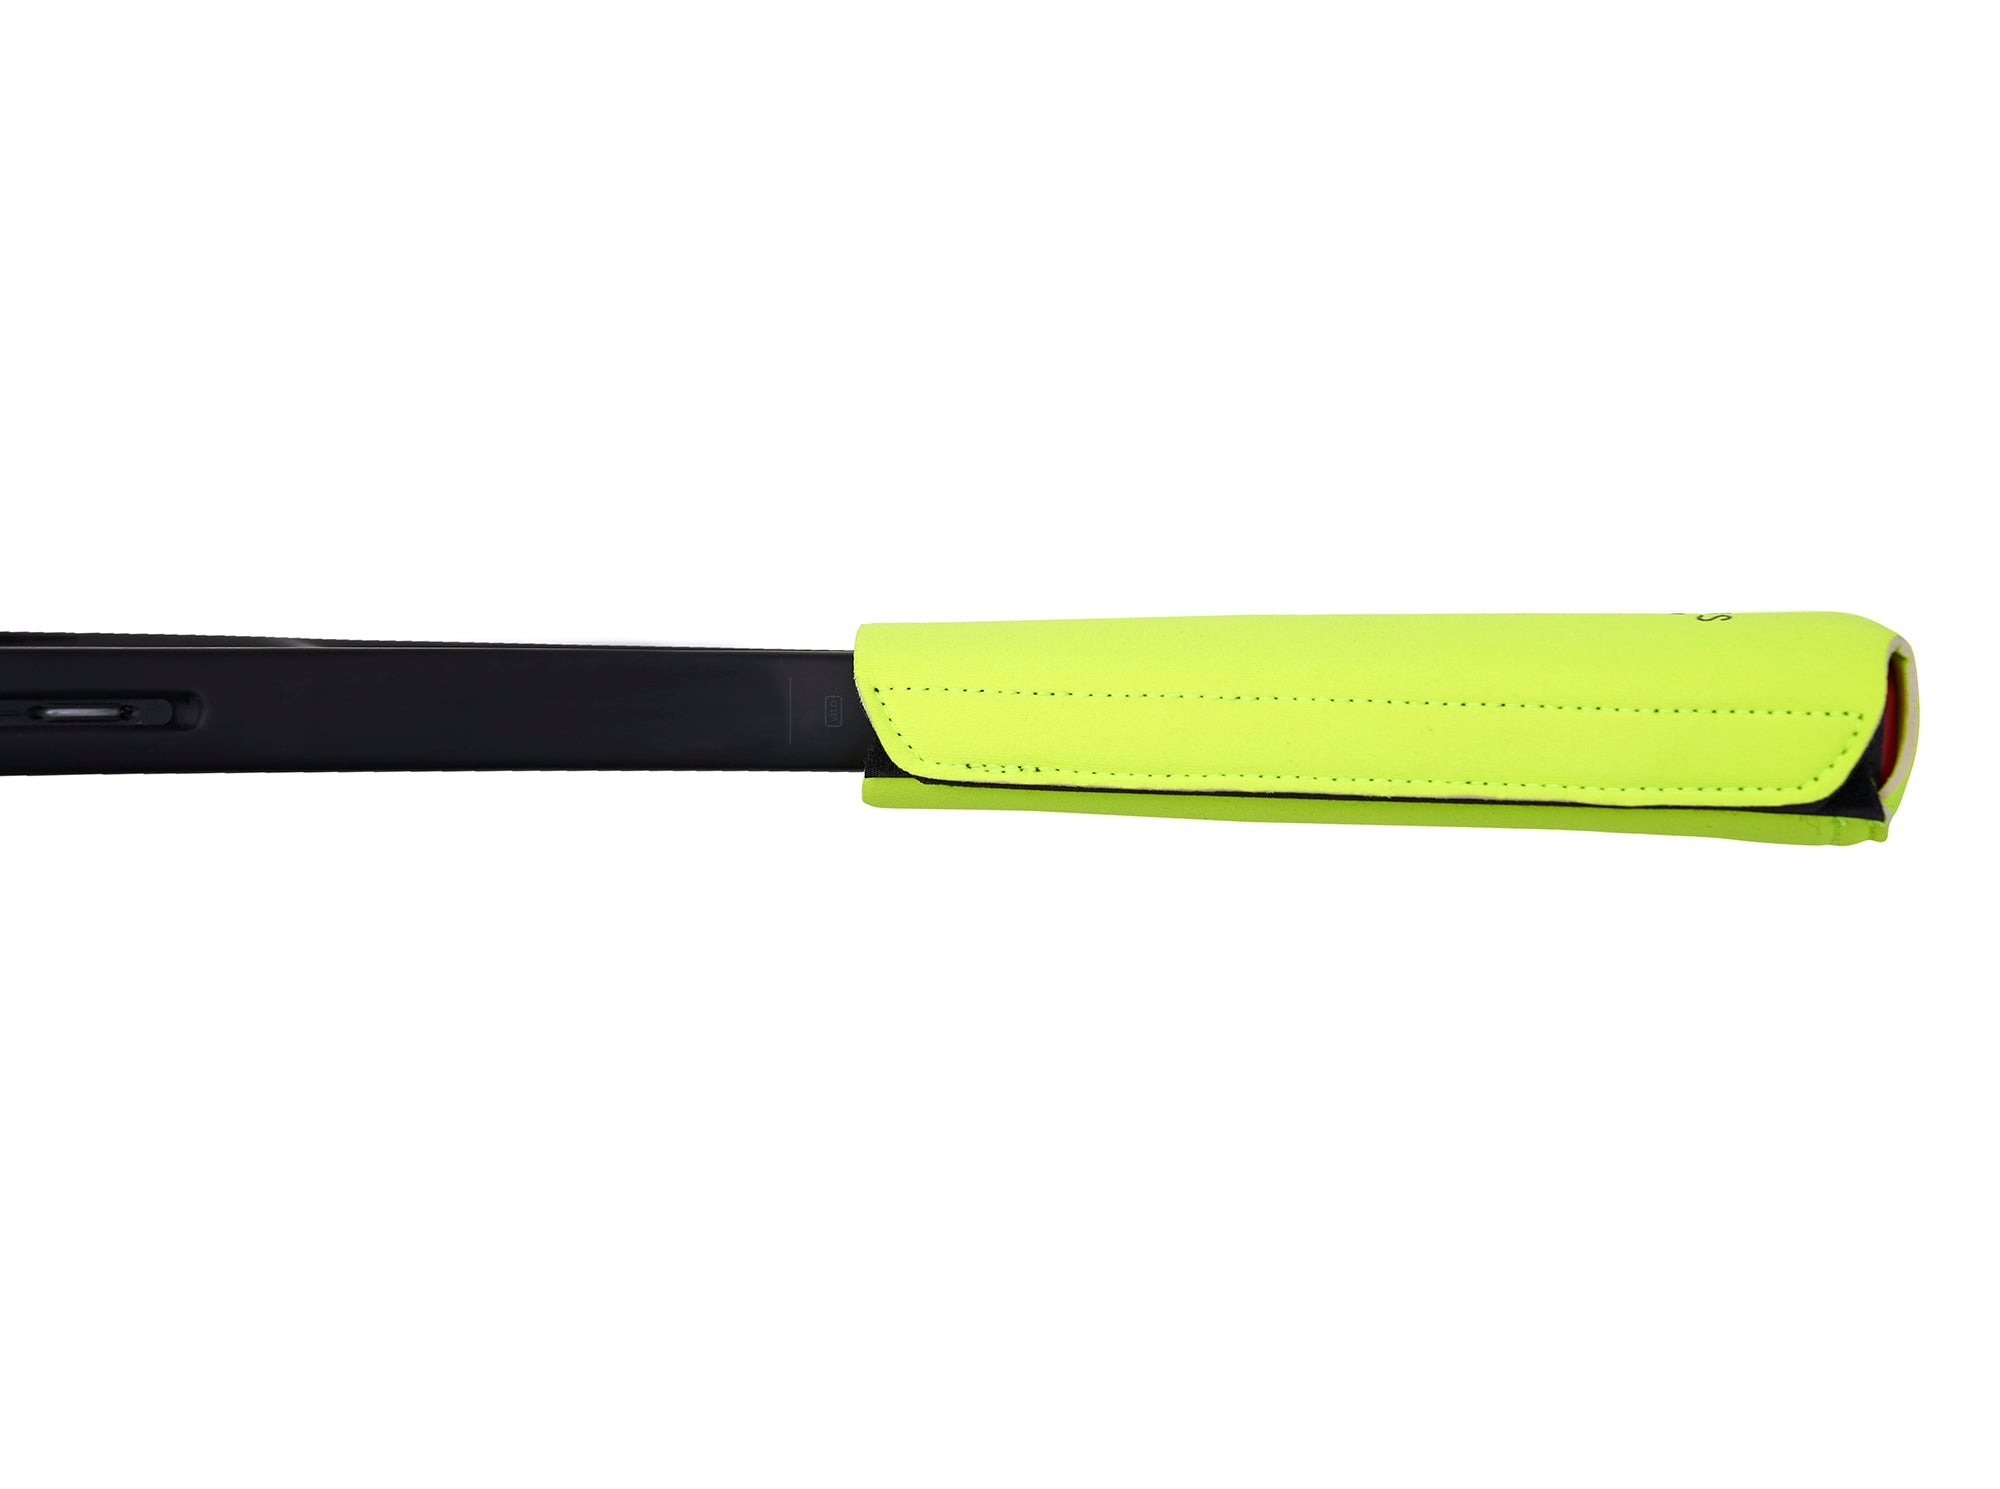 Neoprene Grip Covers  Protect Your Tennis Racket Handles - Epirus London